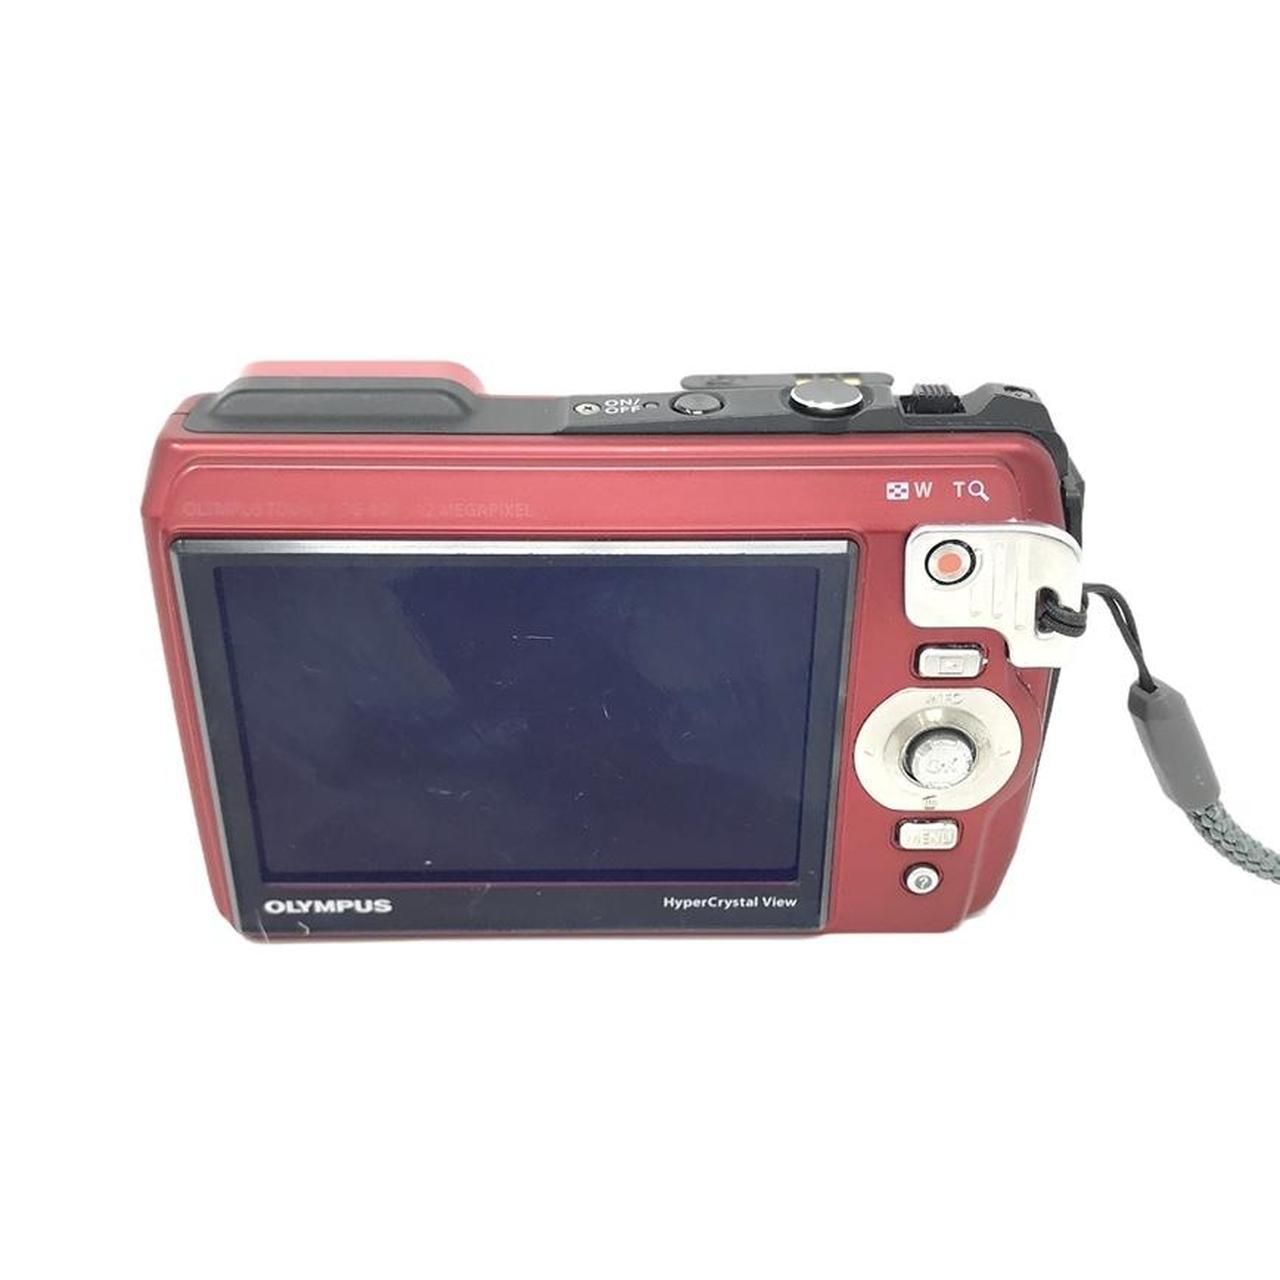 Product Image 3 - Olympus TG-820 Tough Digital Camera

Comes